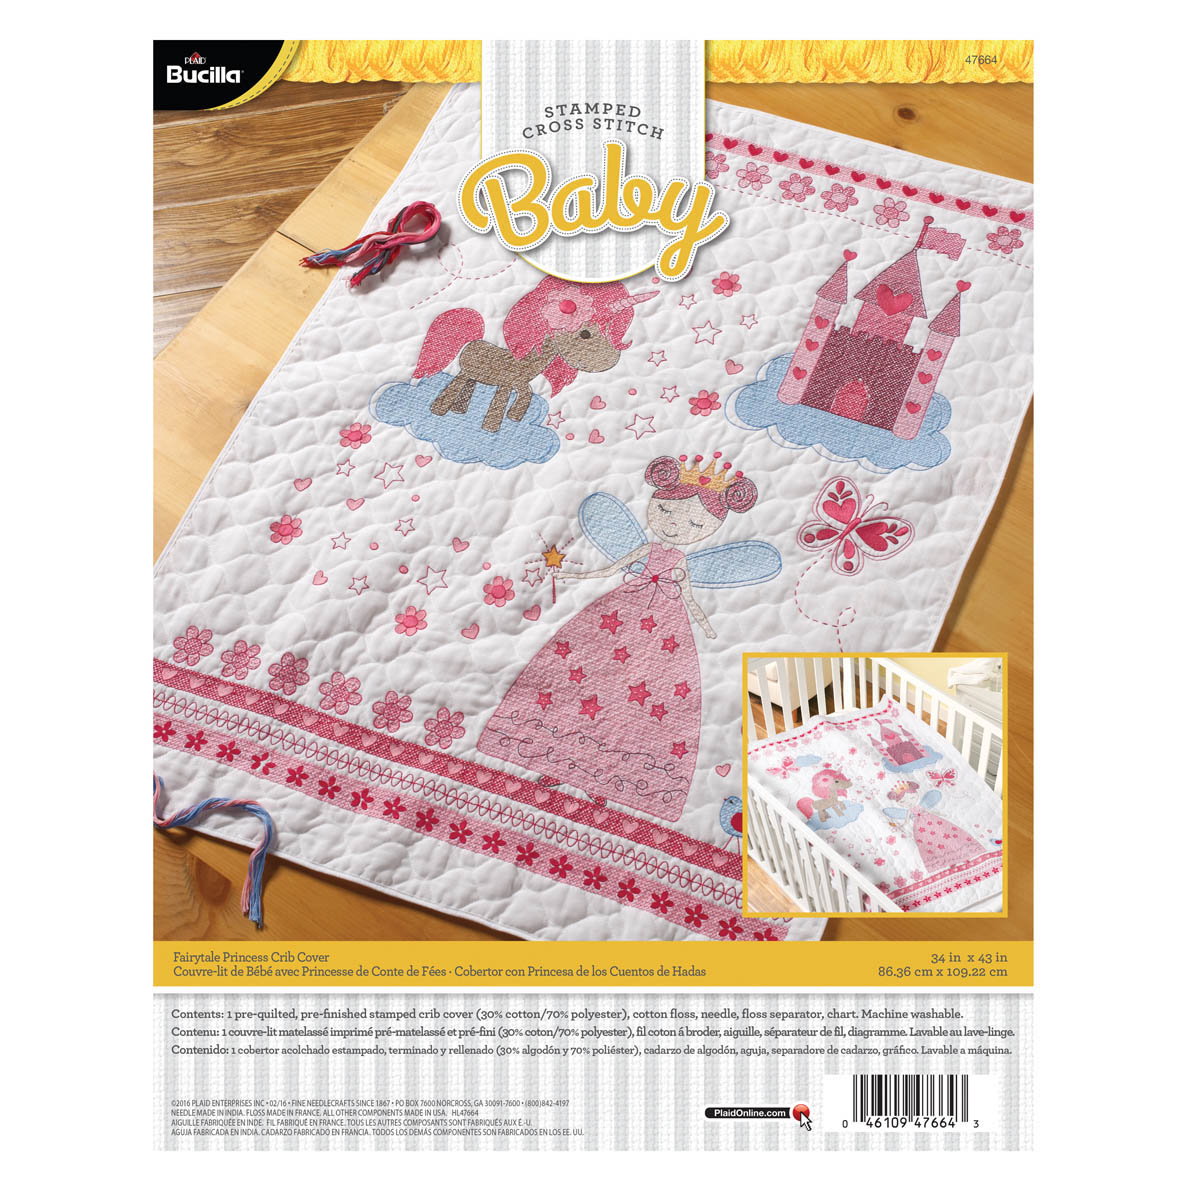 34 by 43-Inch 45386 Baseball Buddies Bucilla Stamped Cross Stitch Crib Cover Kit